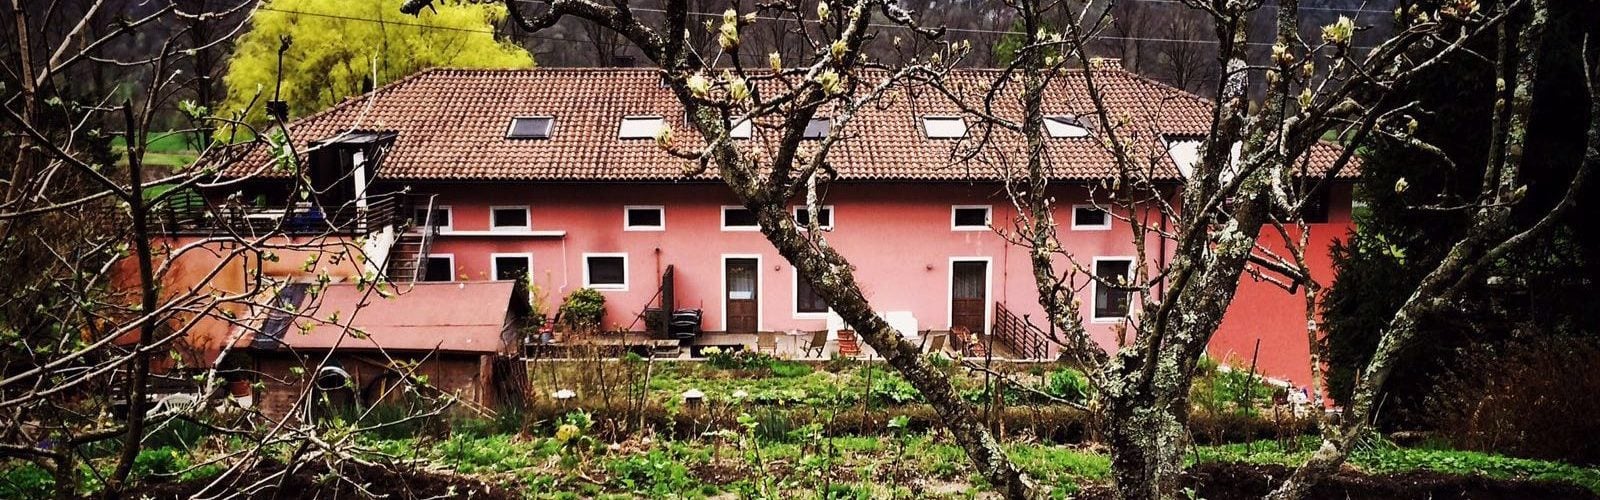 Hiša Franko exterior view, Slovenia